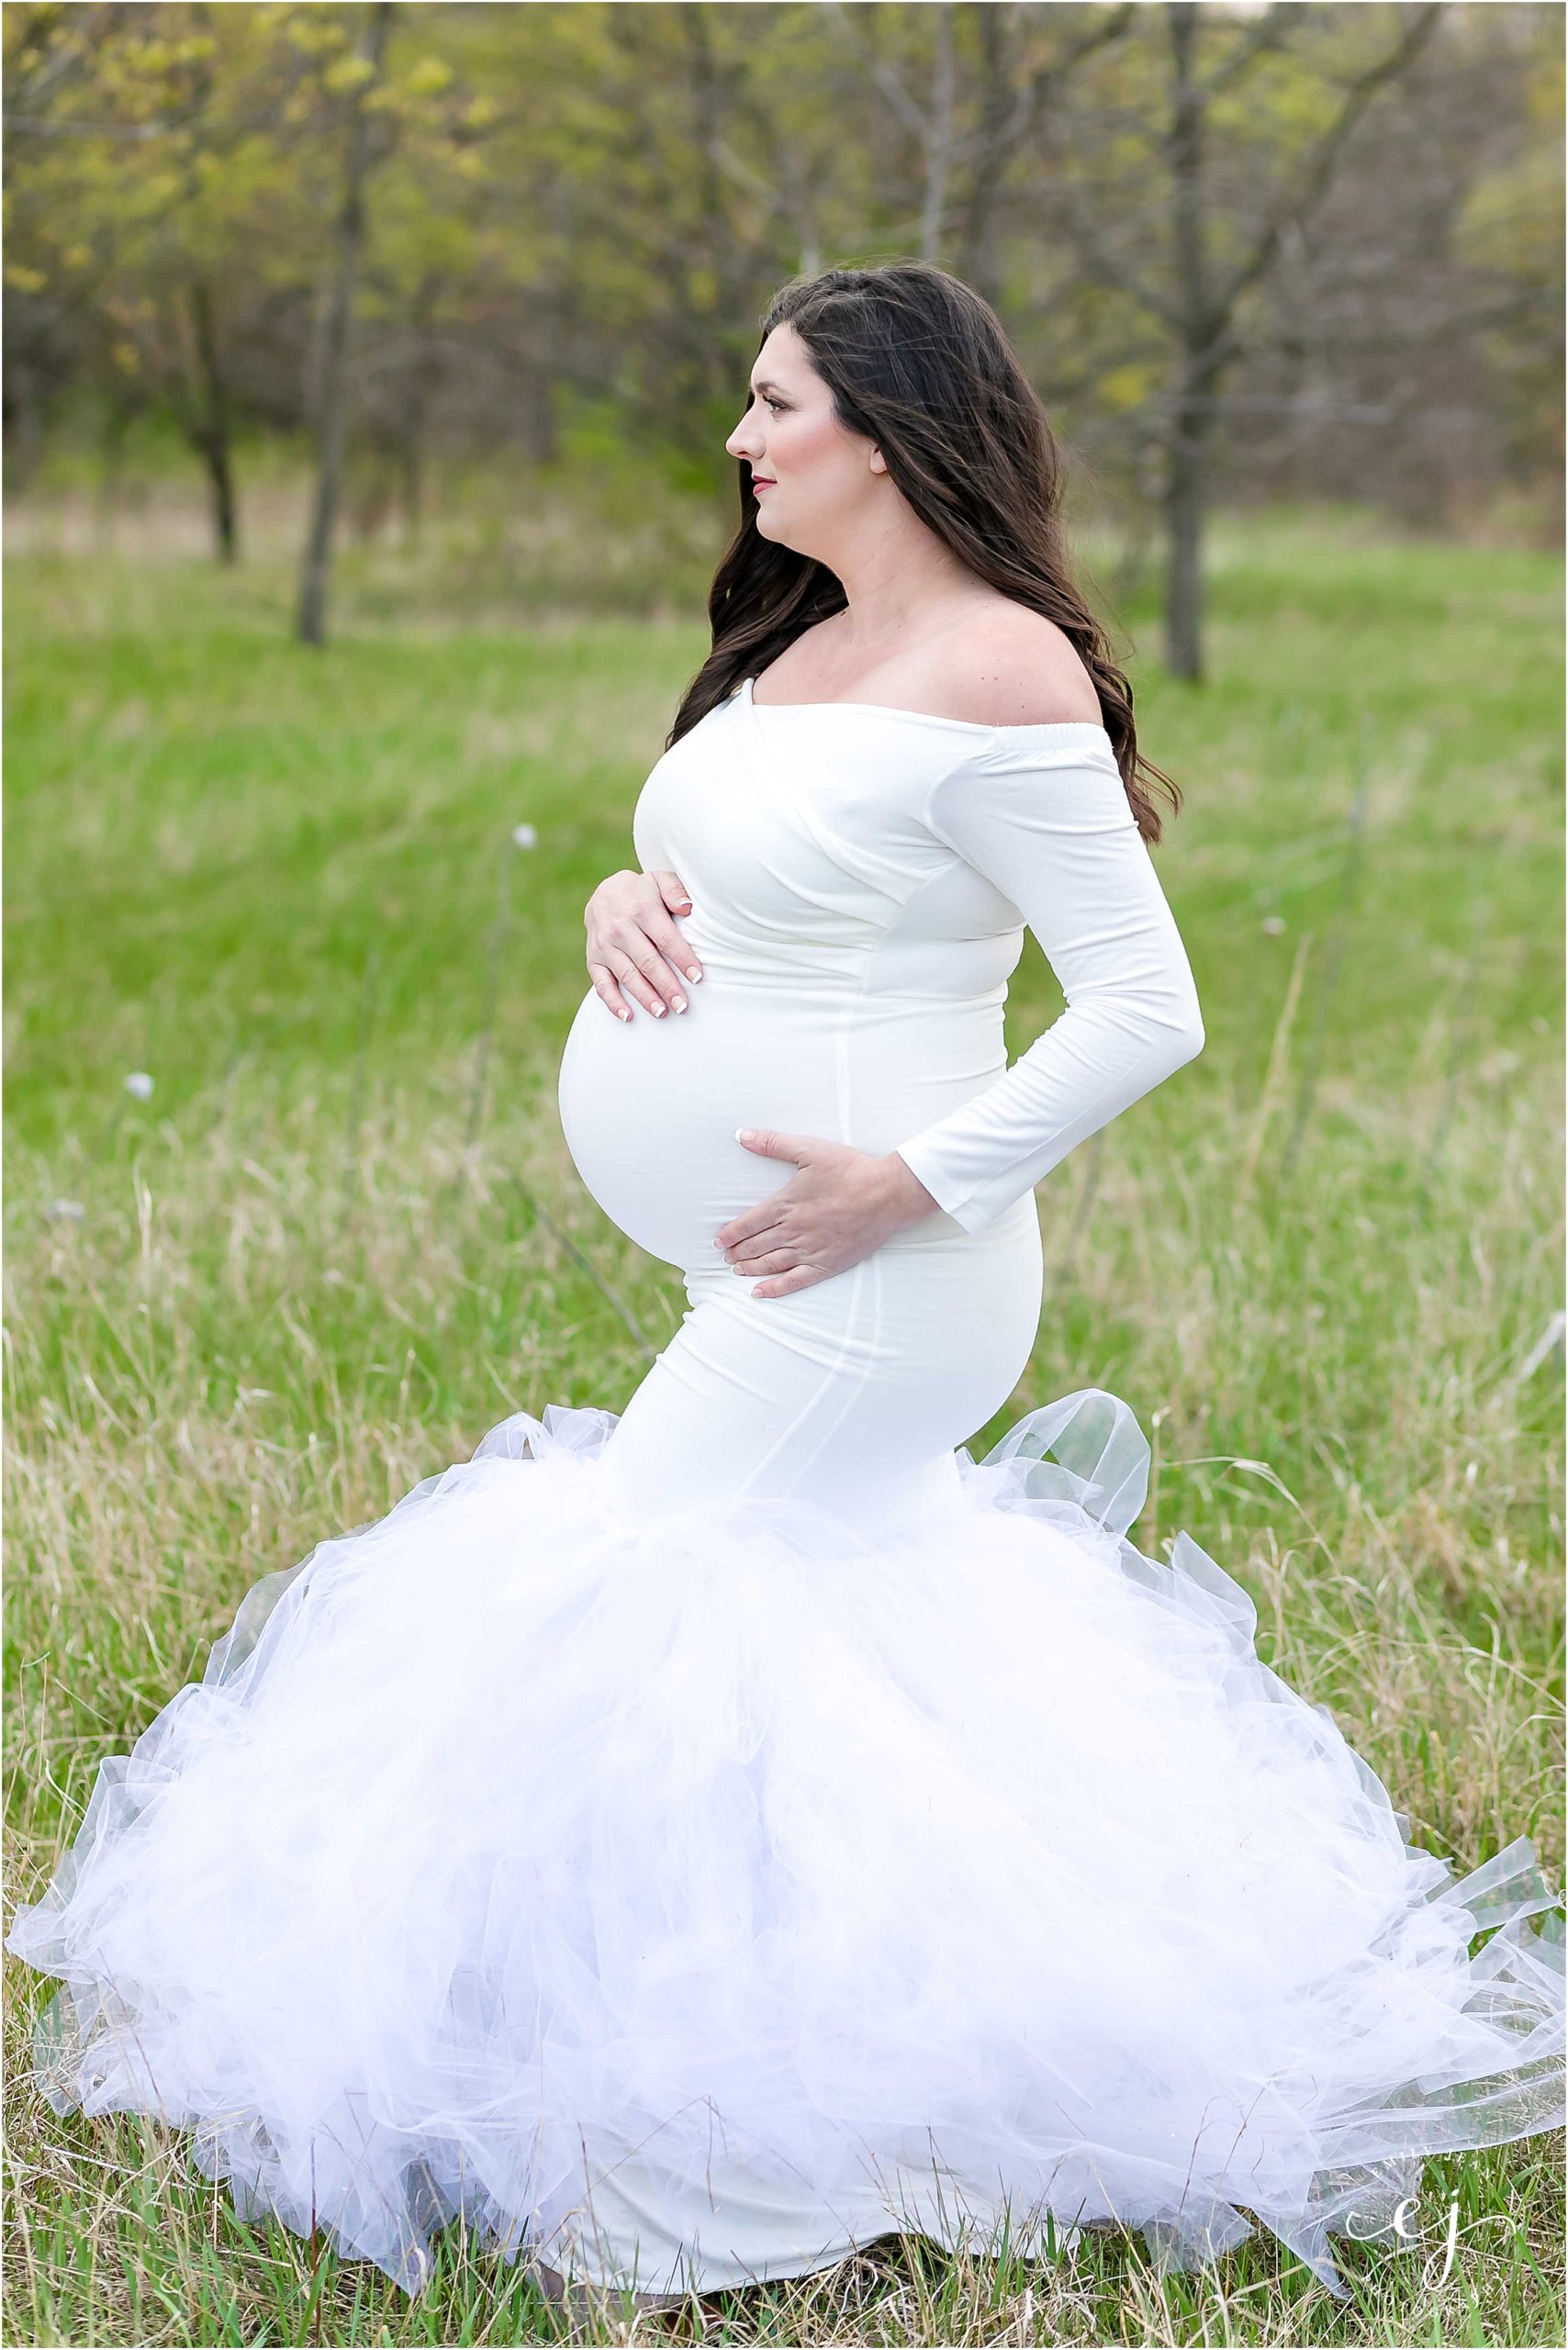 I am luxury white maternity dress at a professional photo shoot